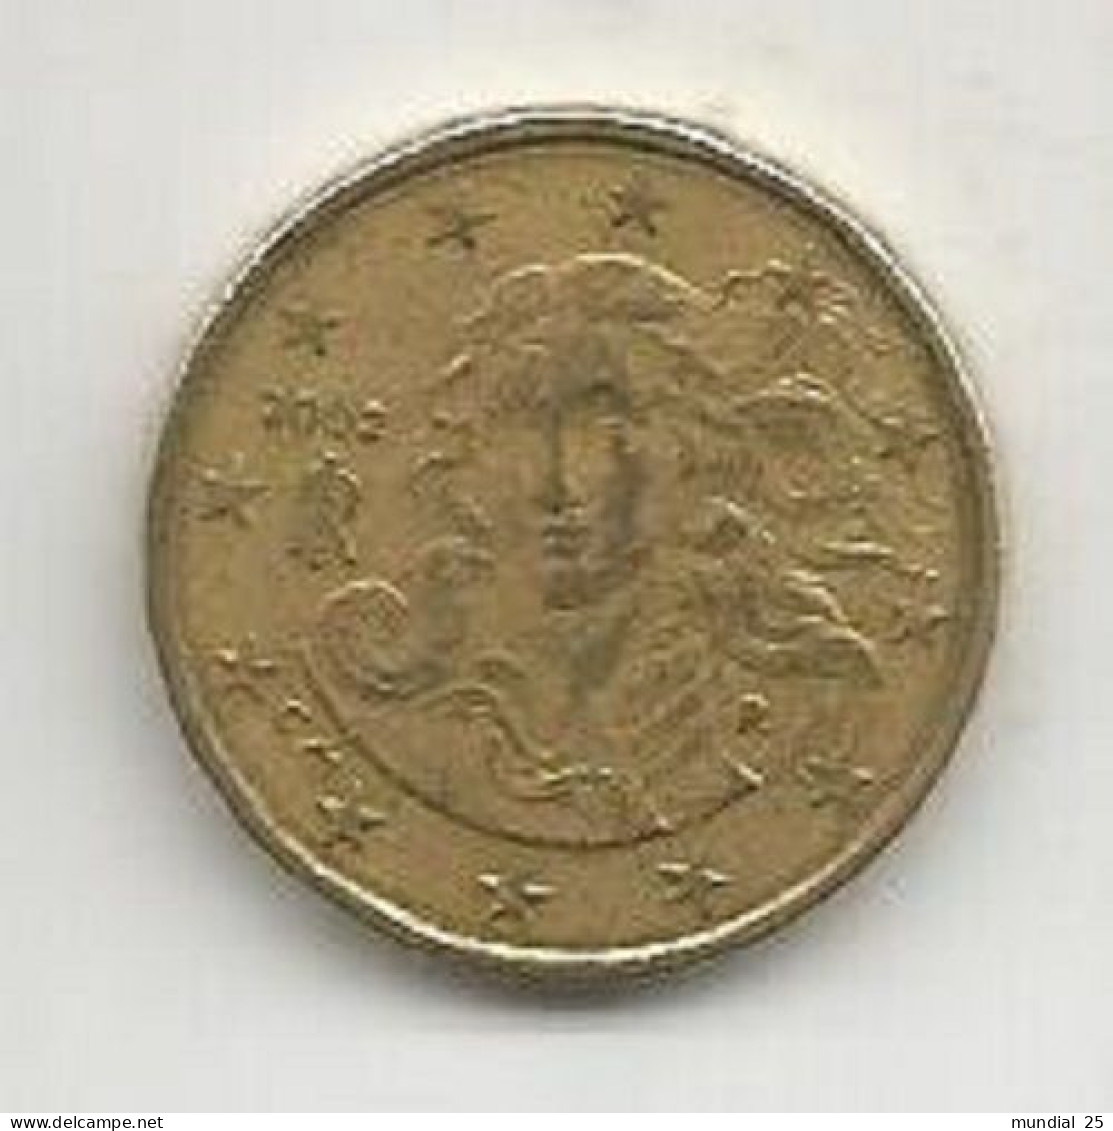 ITALY 10 EURO CENT 2002 (R) - Italie